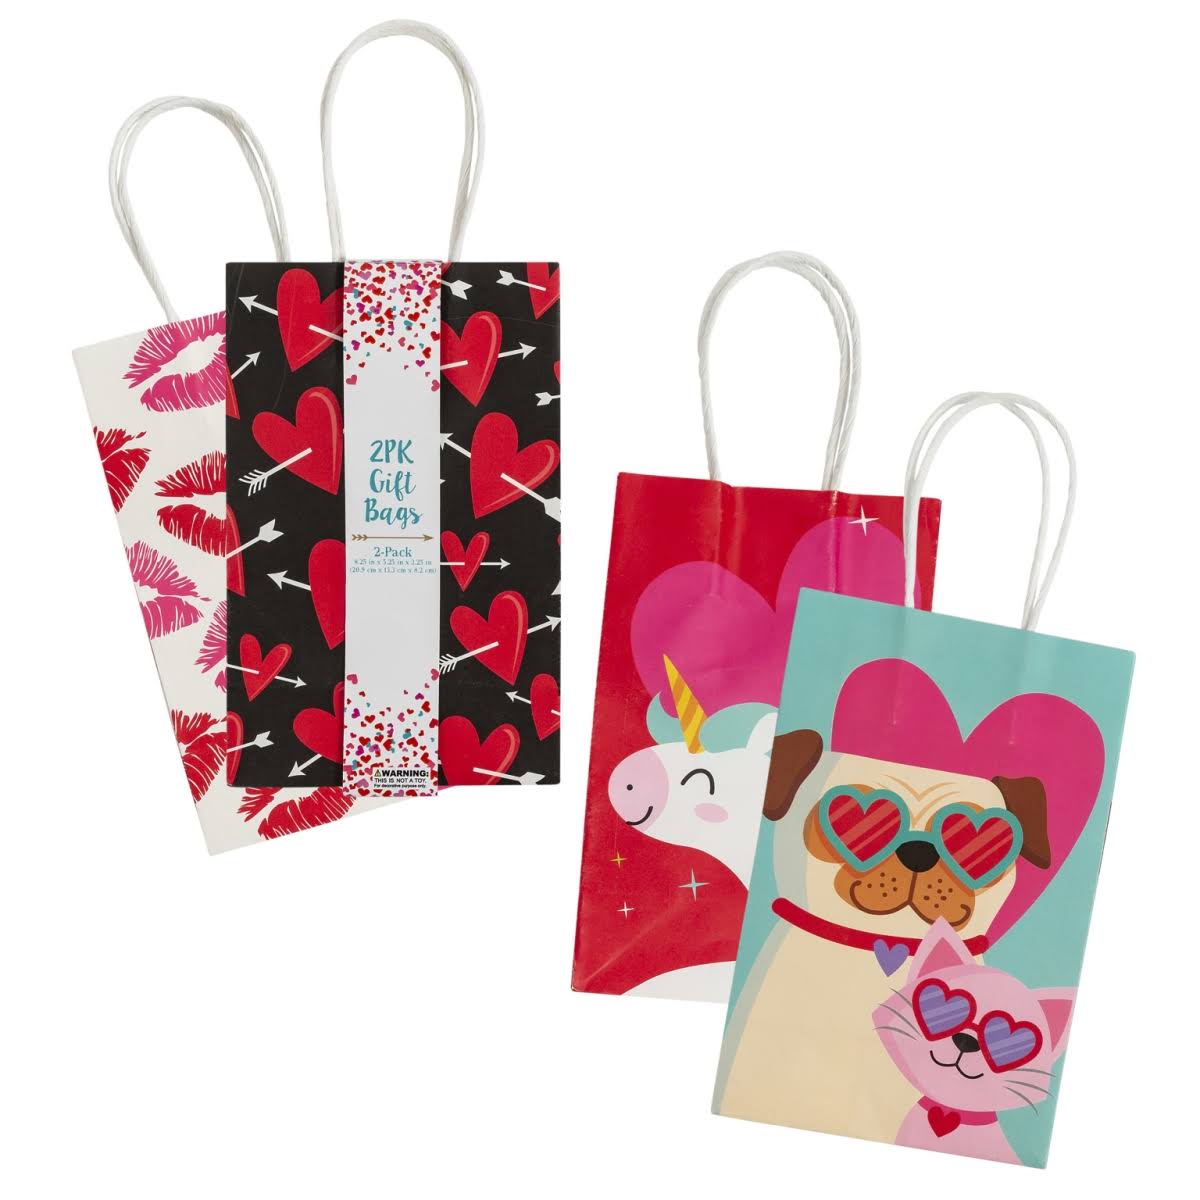 Ddi 2343299 Valentine Gift Bag Assorted Design - Case of 48 - Pack of 2